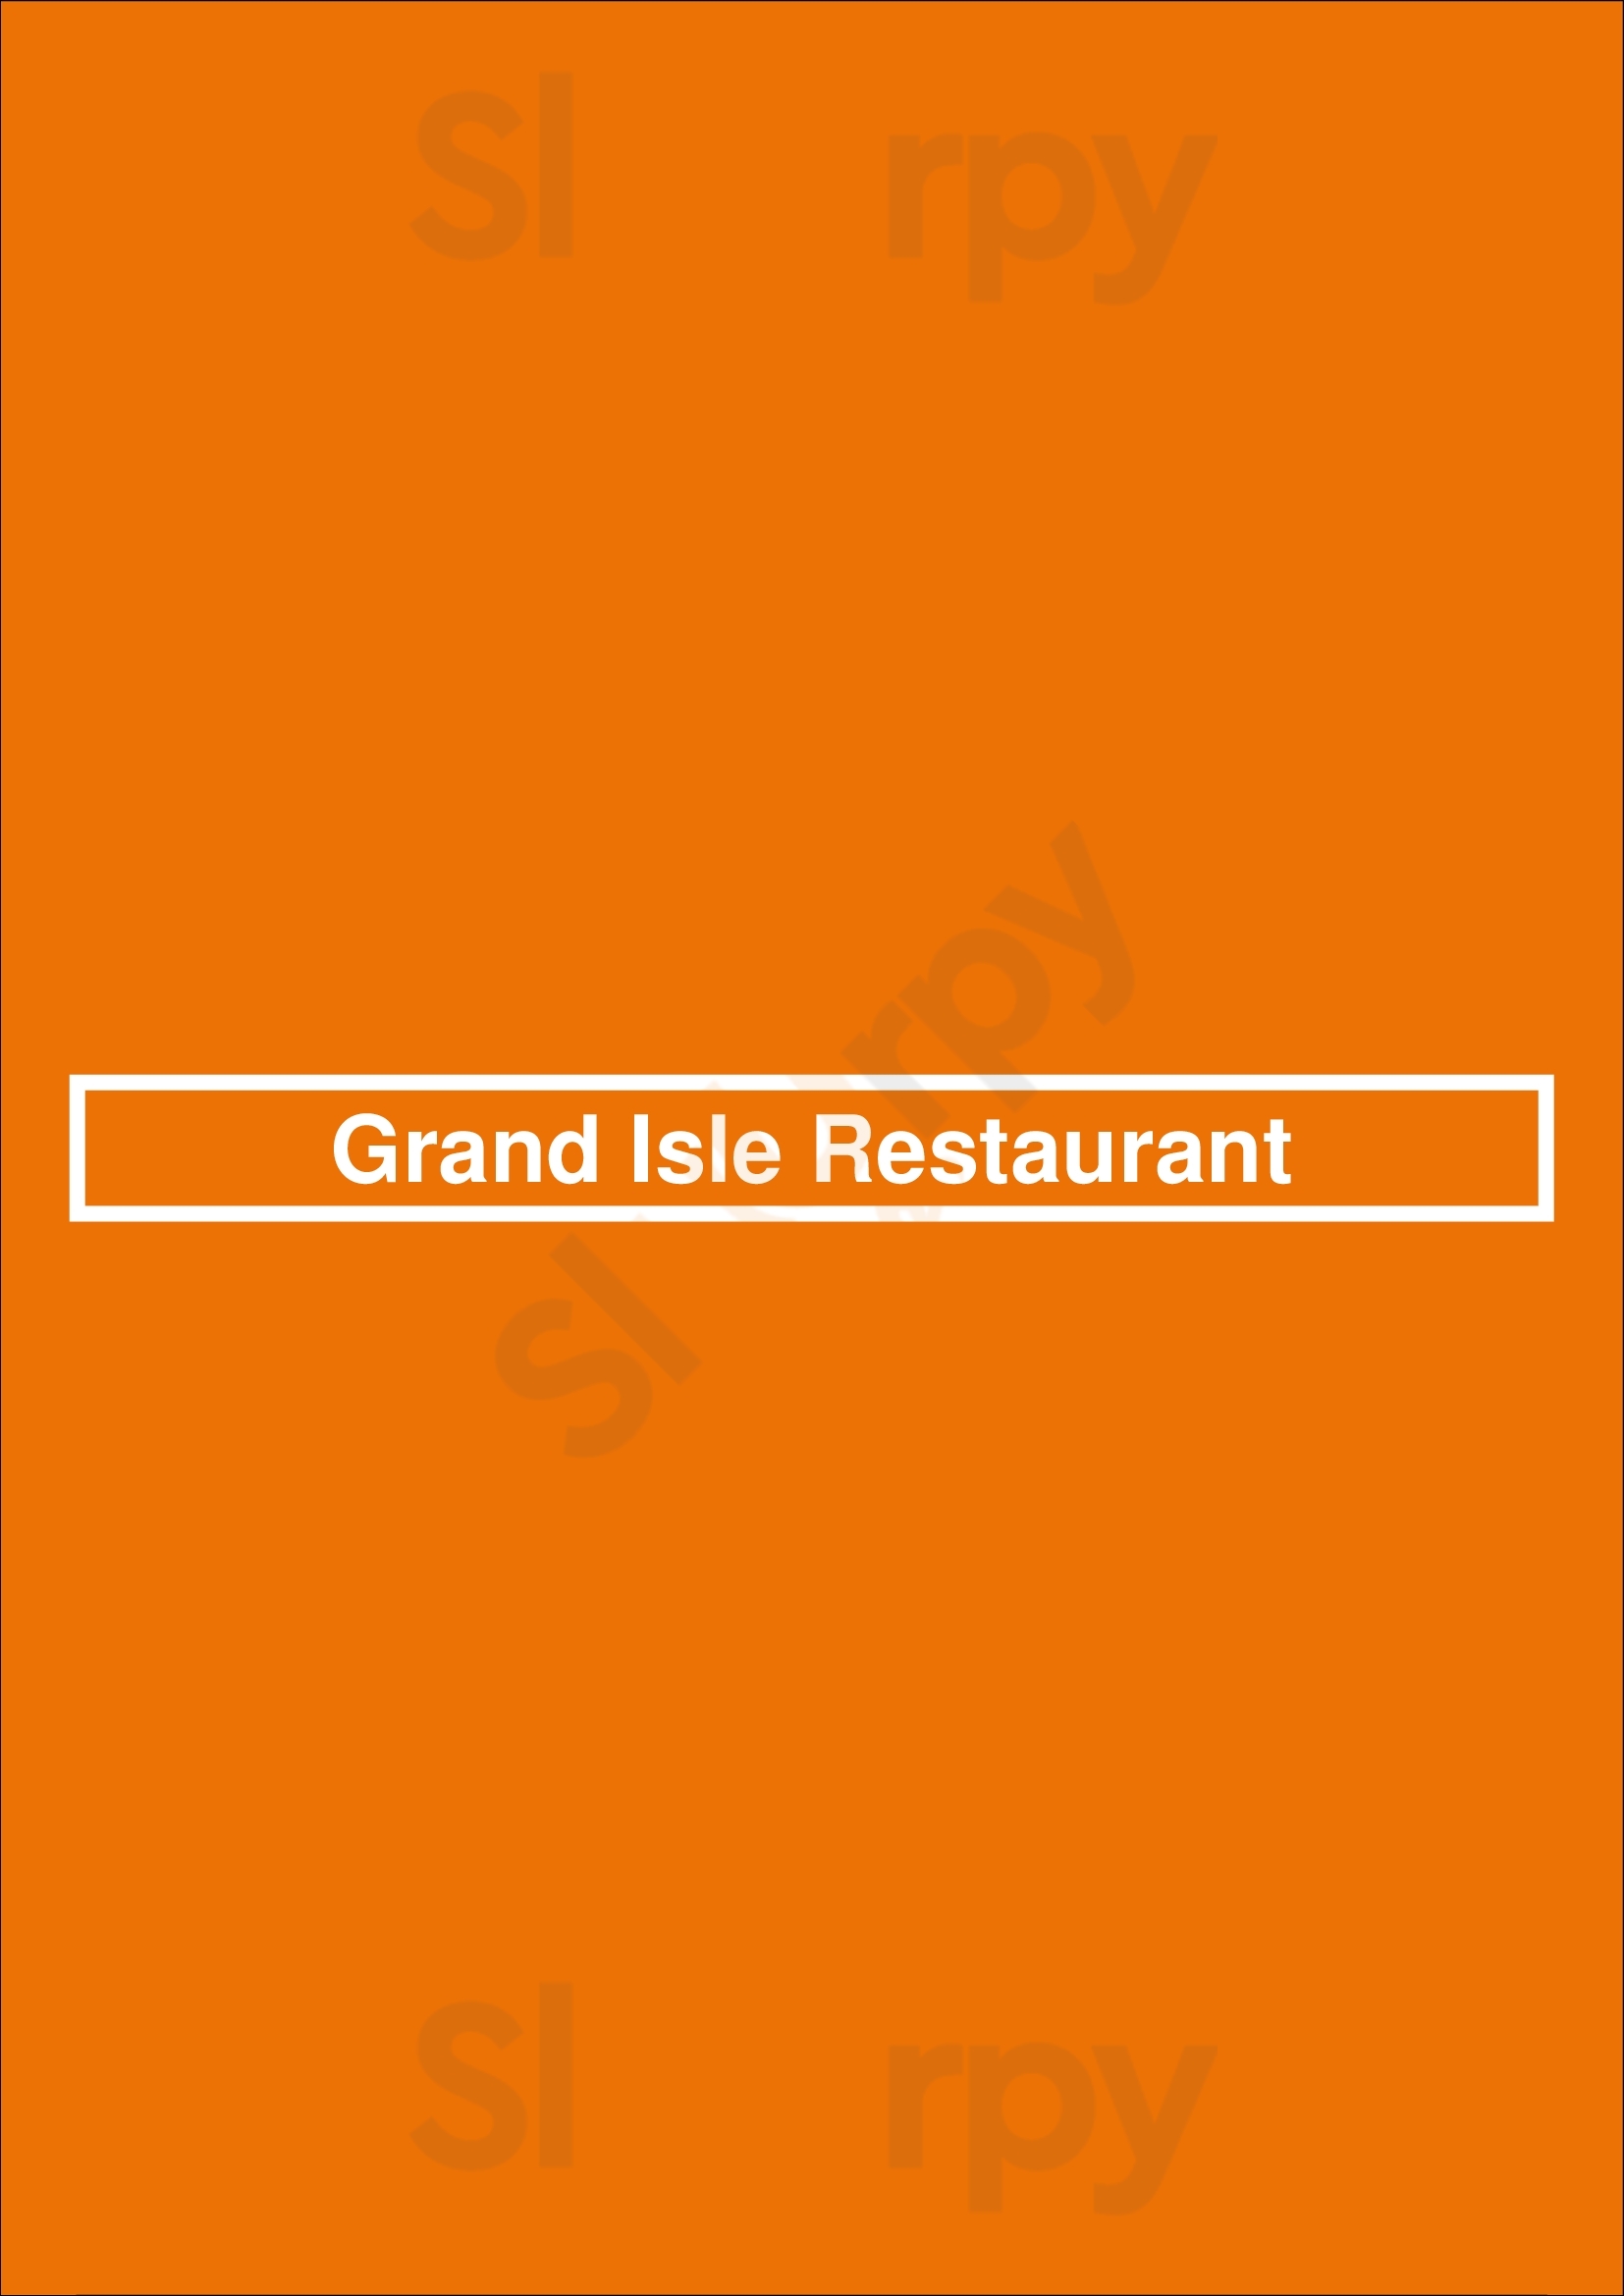 Grand Isle Restaurant New Orleans Menu - 1